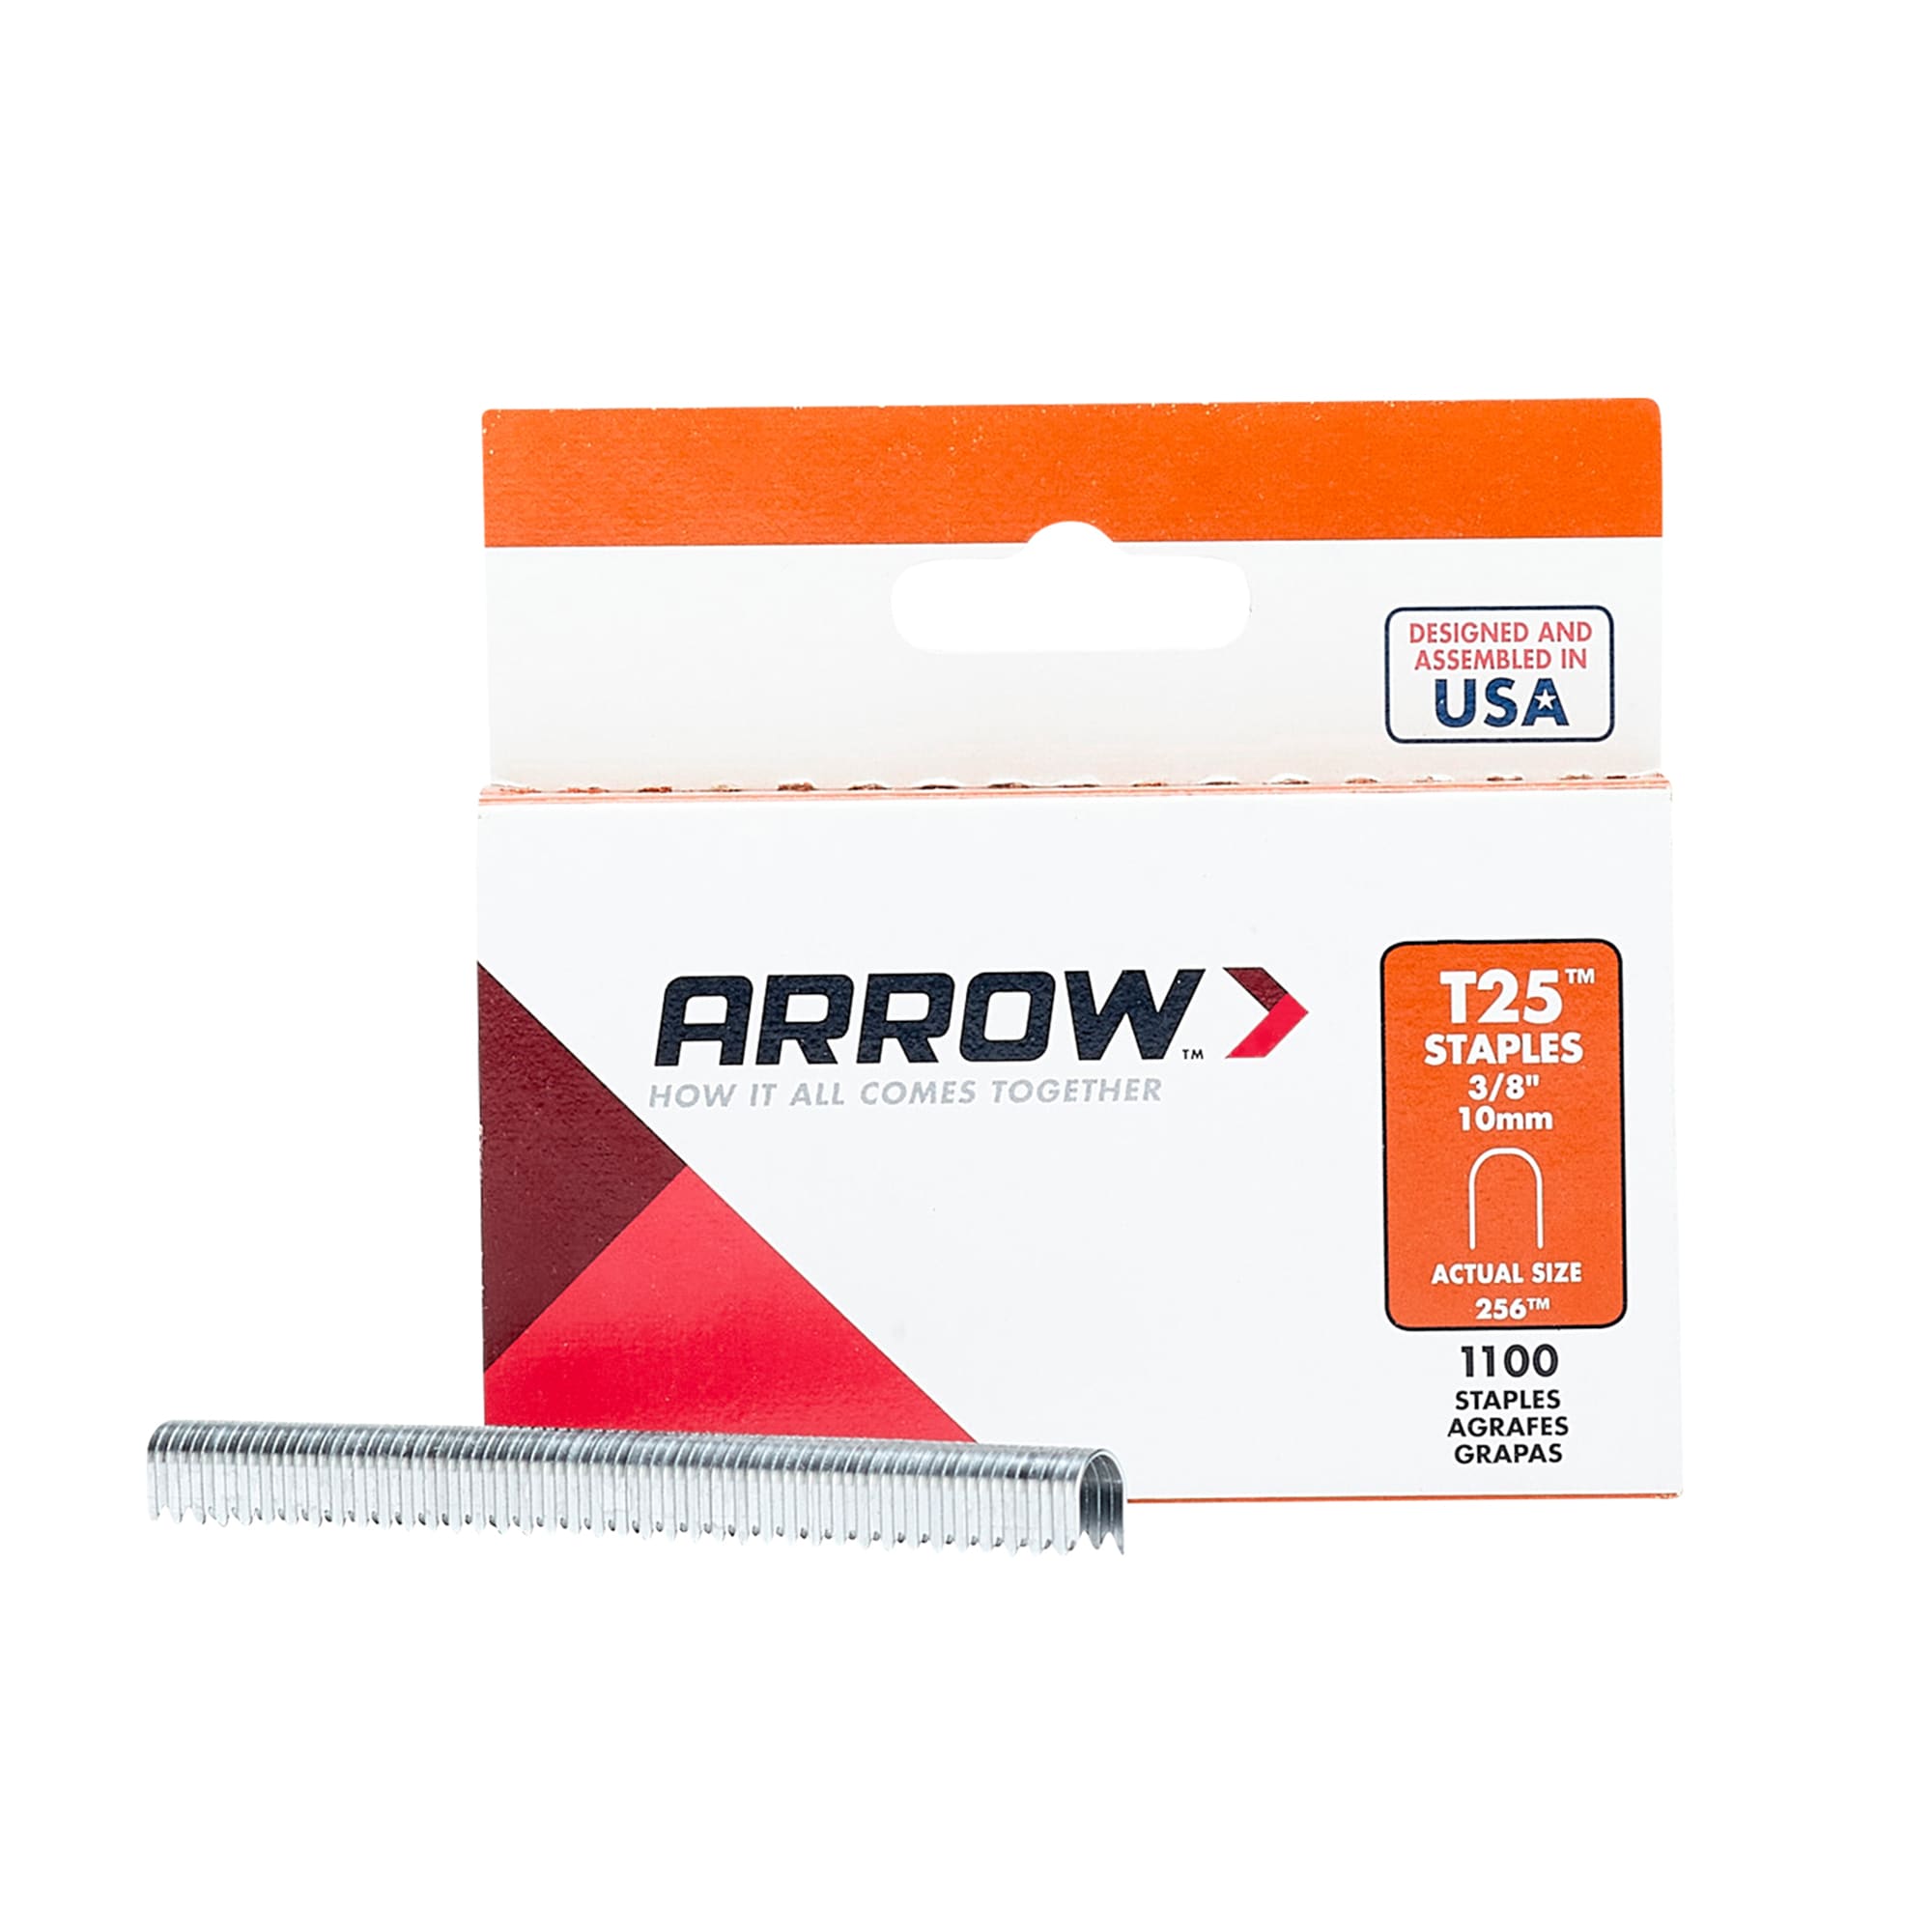 Arrow T18 Staples 10mm 3/8in Box 1000 